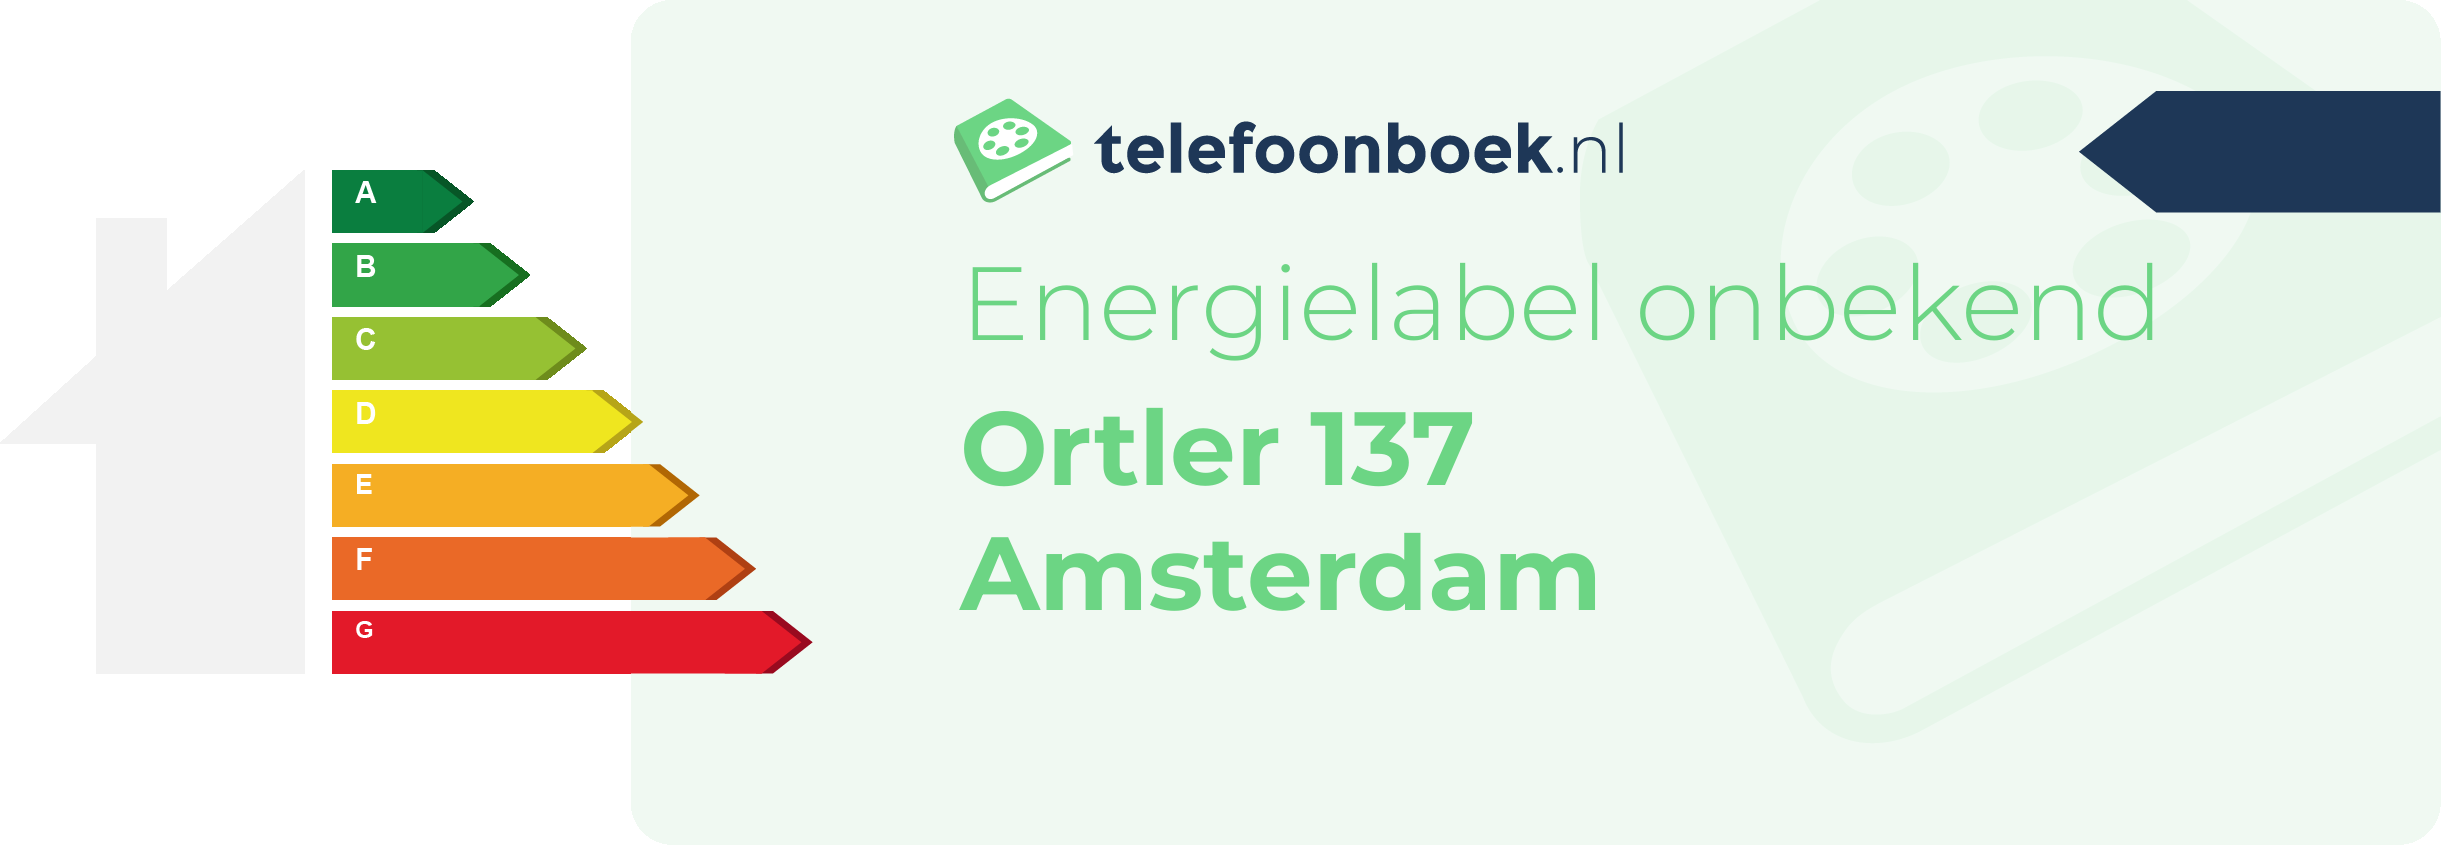 Energielabel Ortler 137 Amsterdam